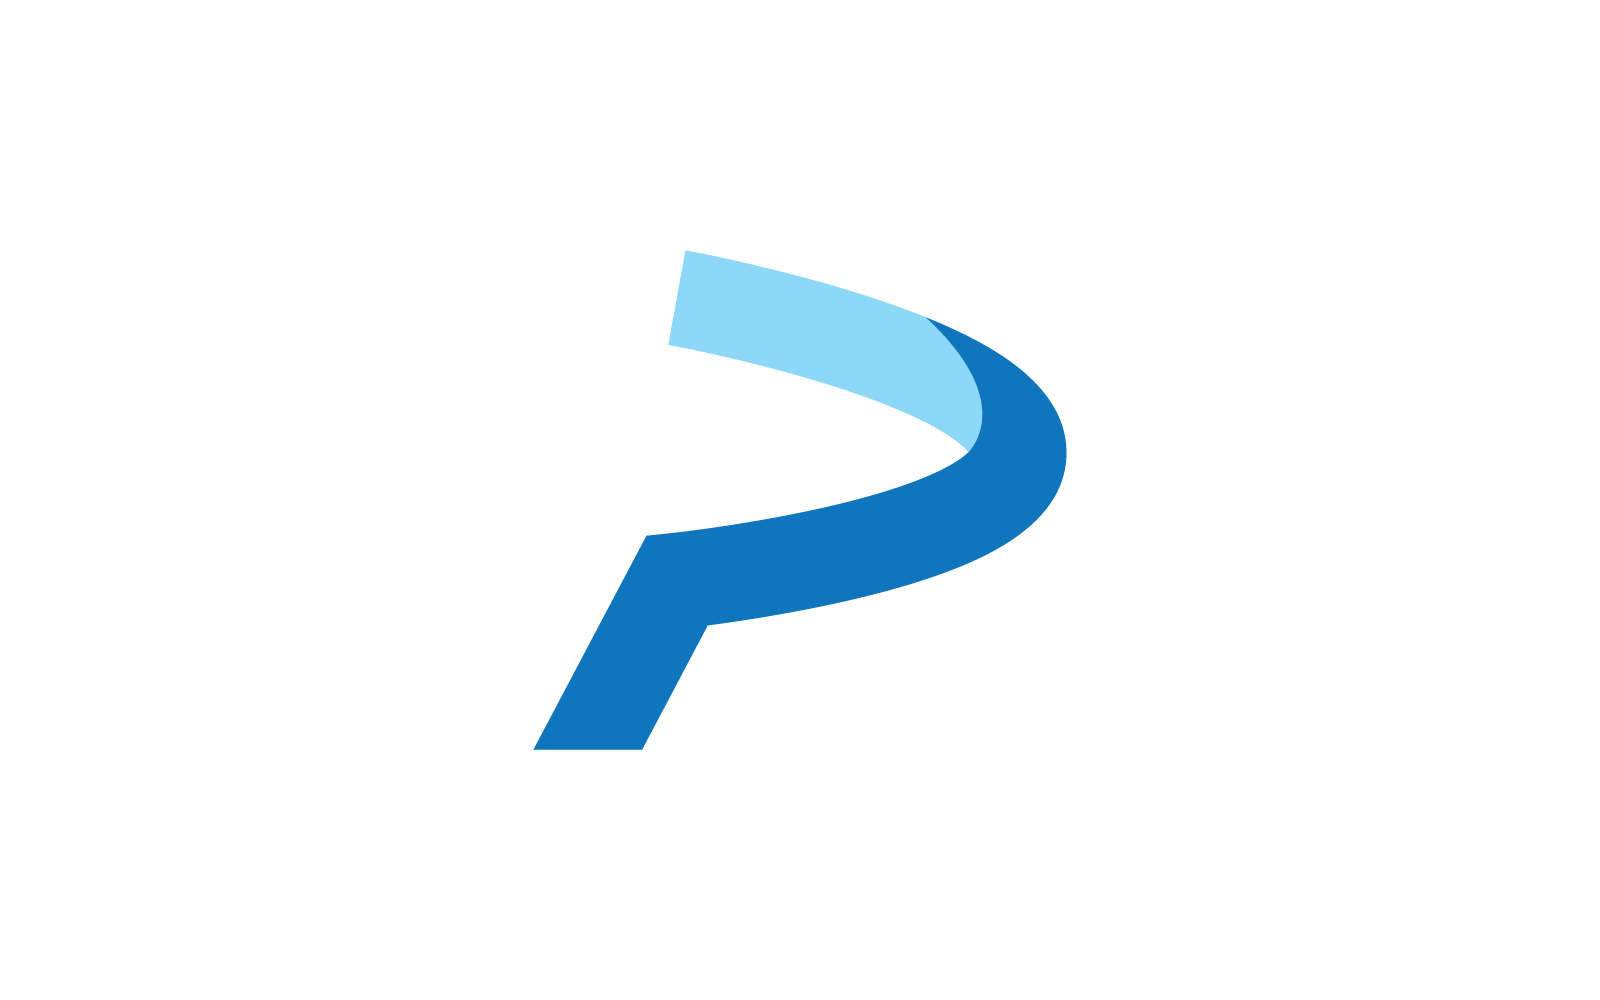 P initial pay logo vector design